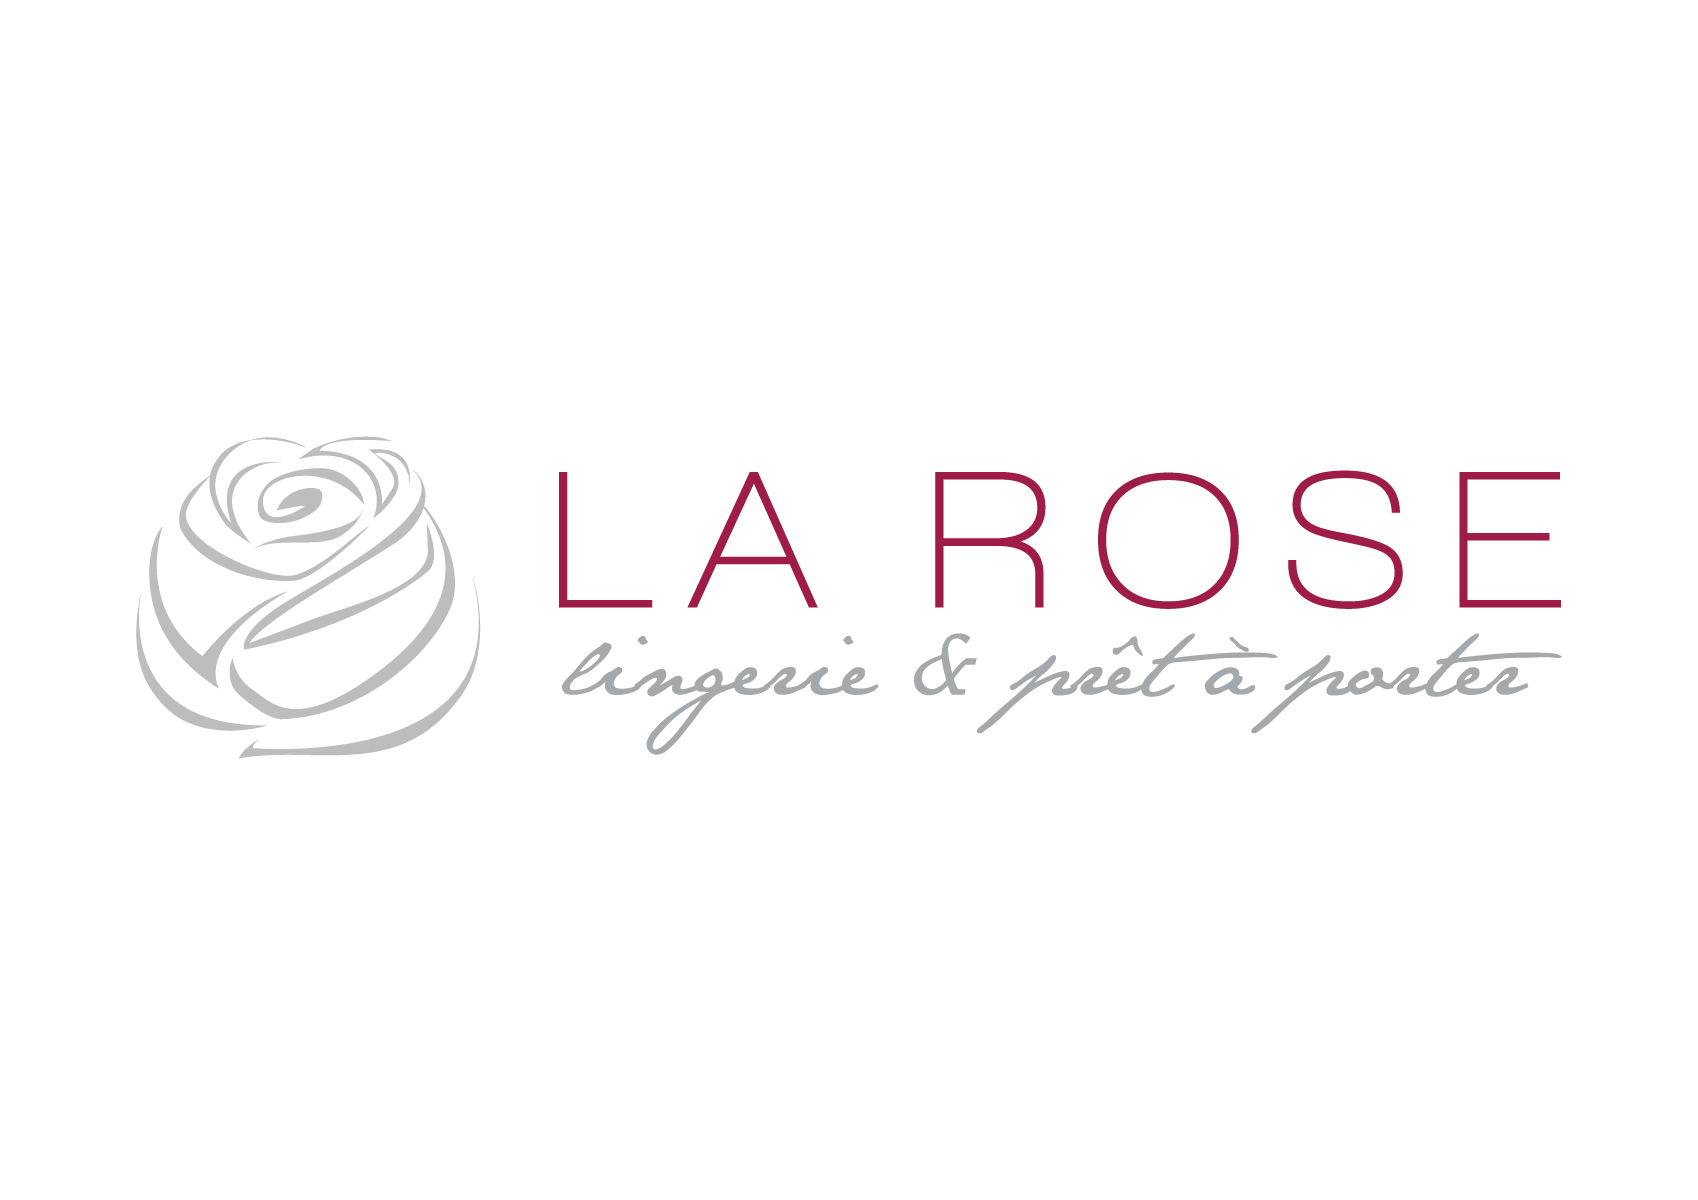 The Rose Logo - Designs by San-Art - Logo Design for Online Store Fashion: LA ROSE